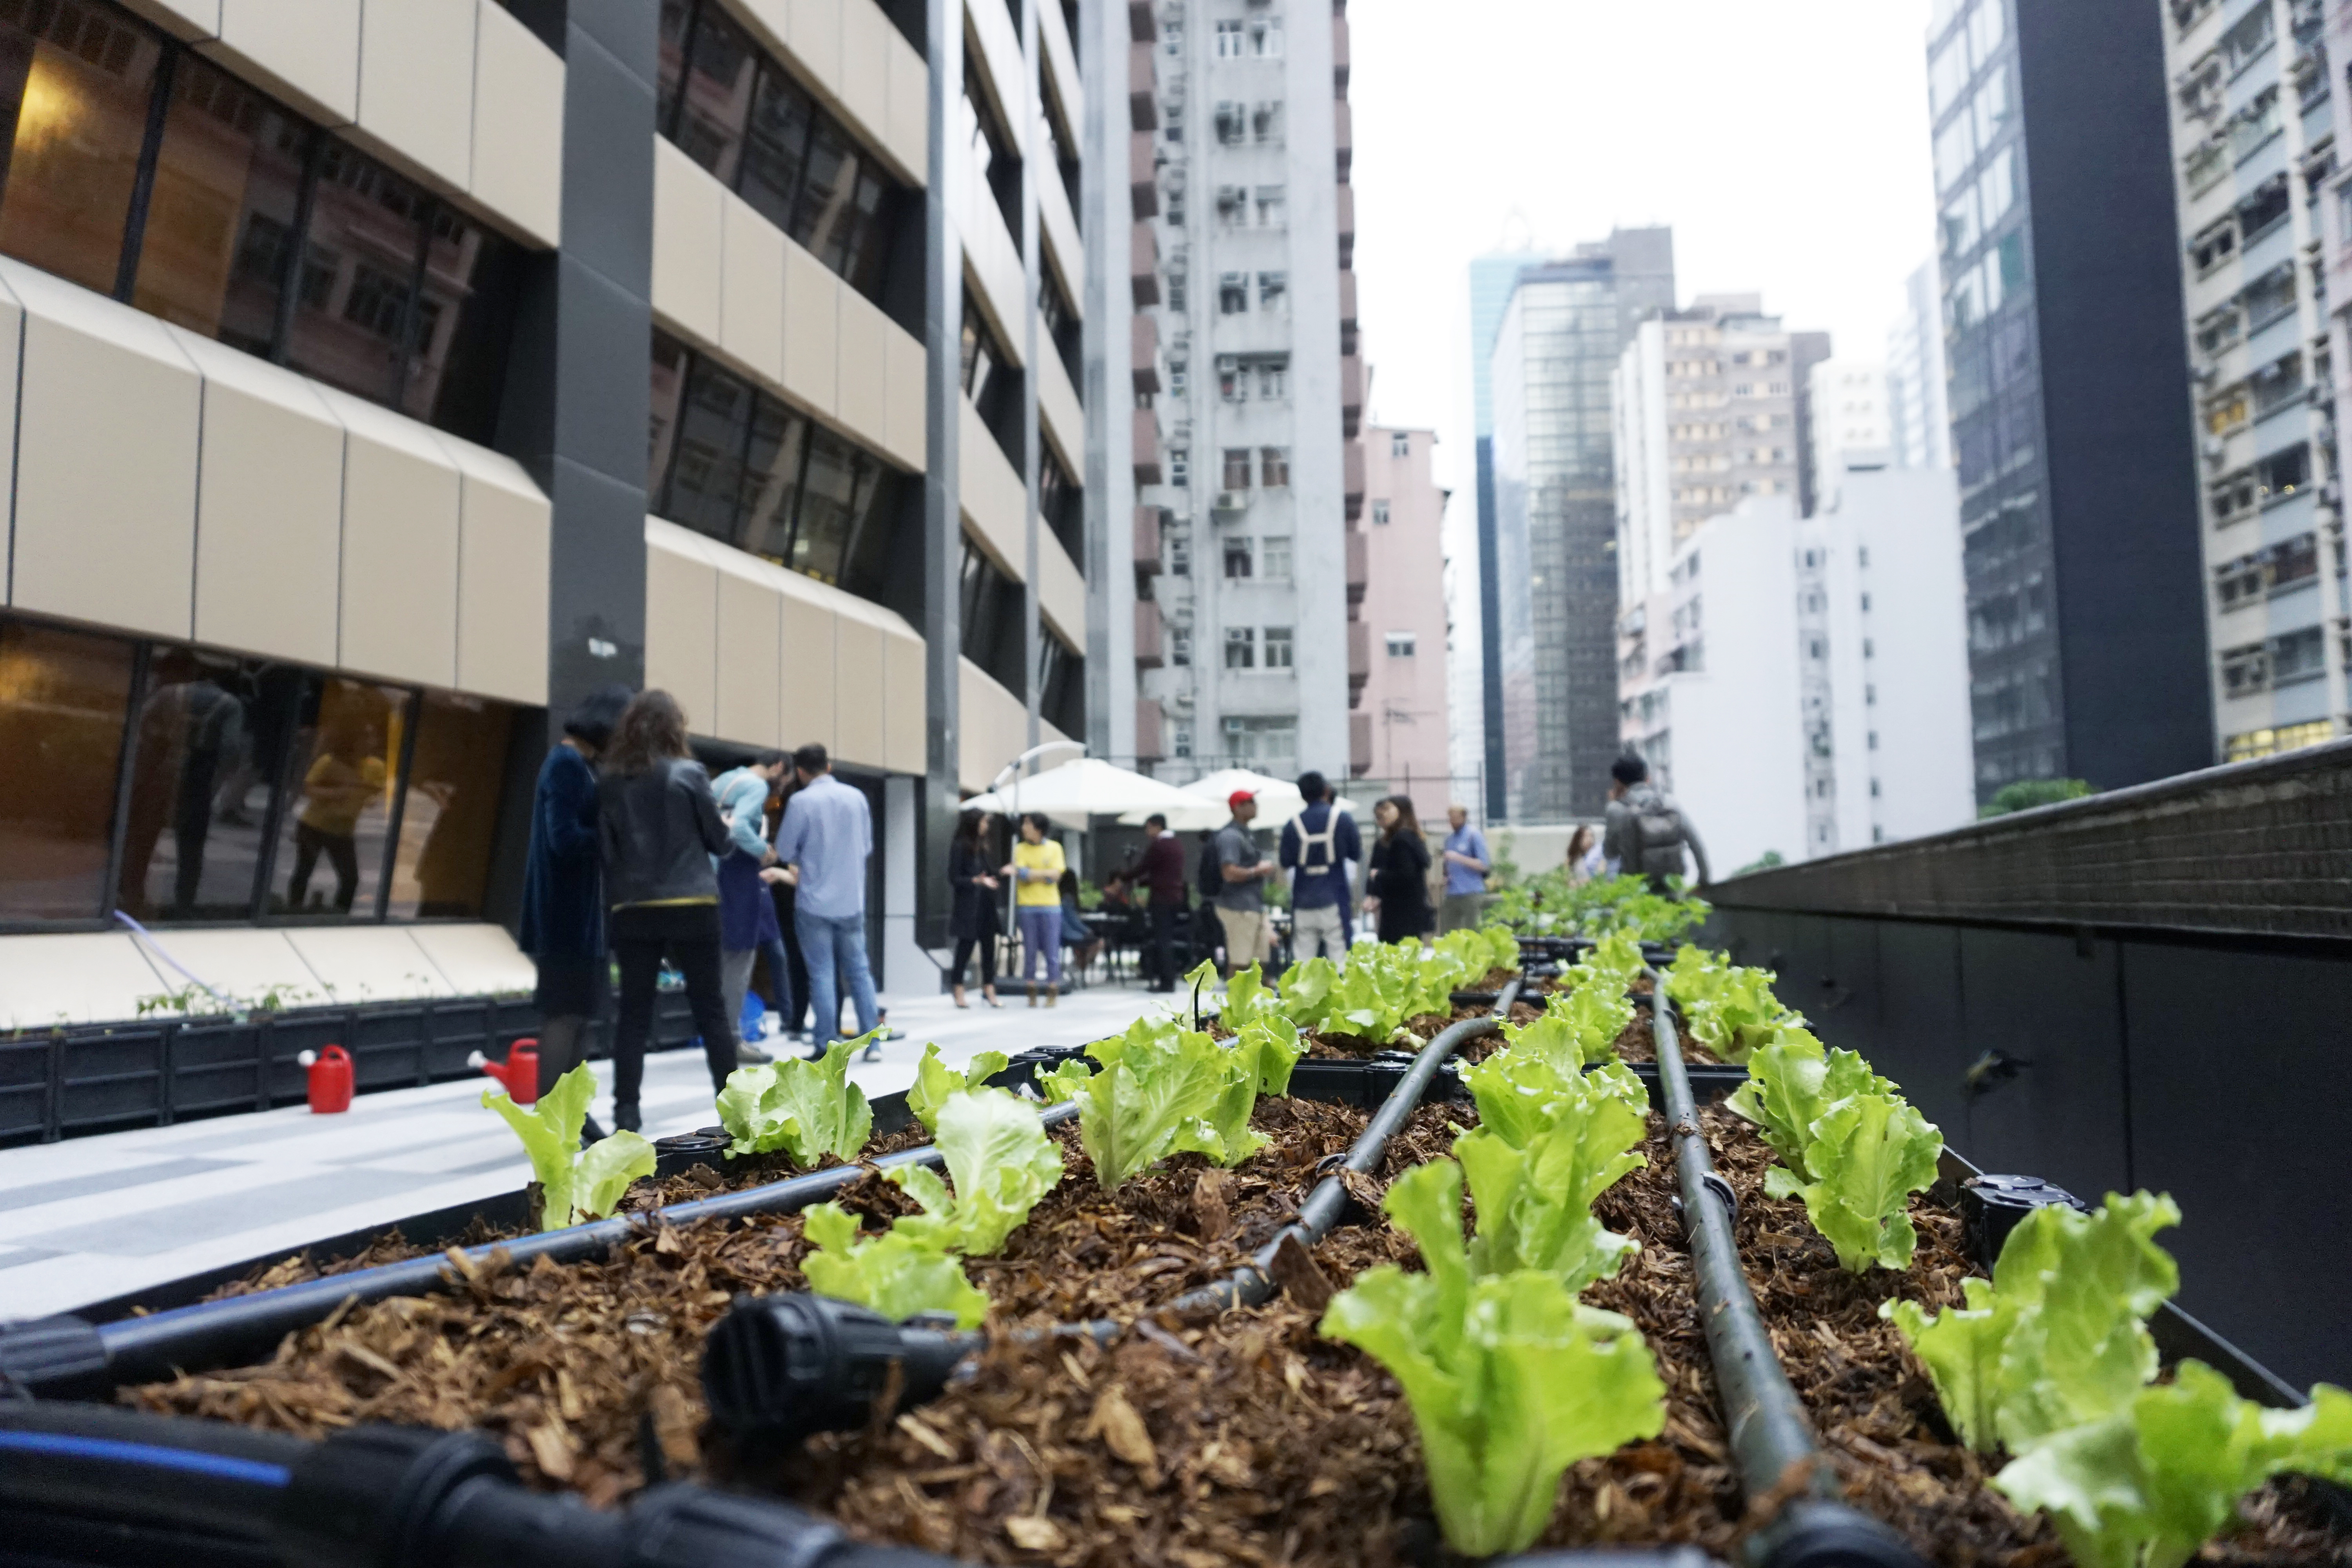 Participants can grow their own seasonal plants at the garden in Wan Chai